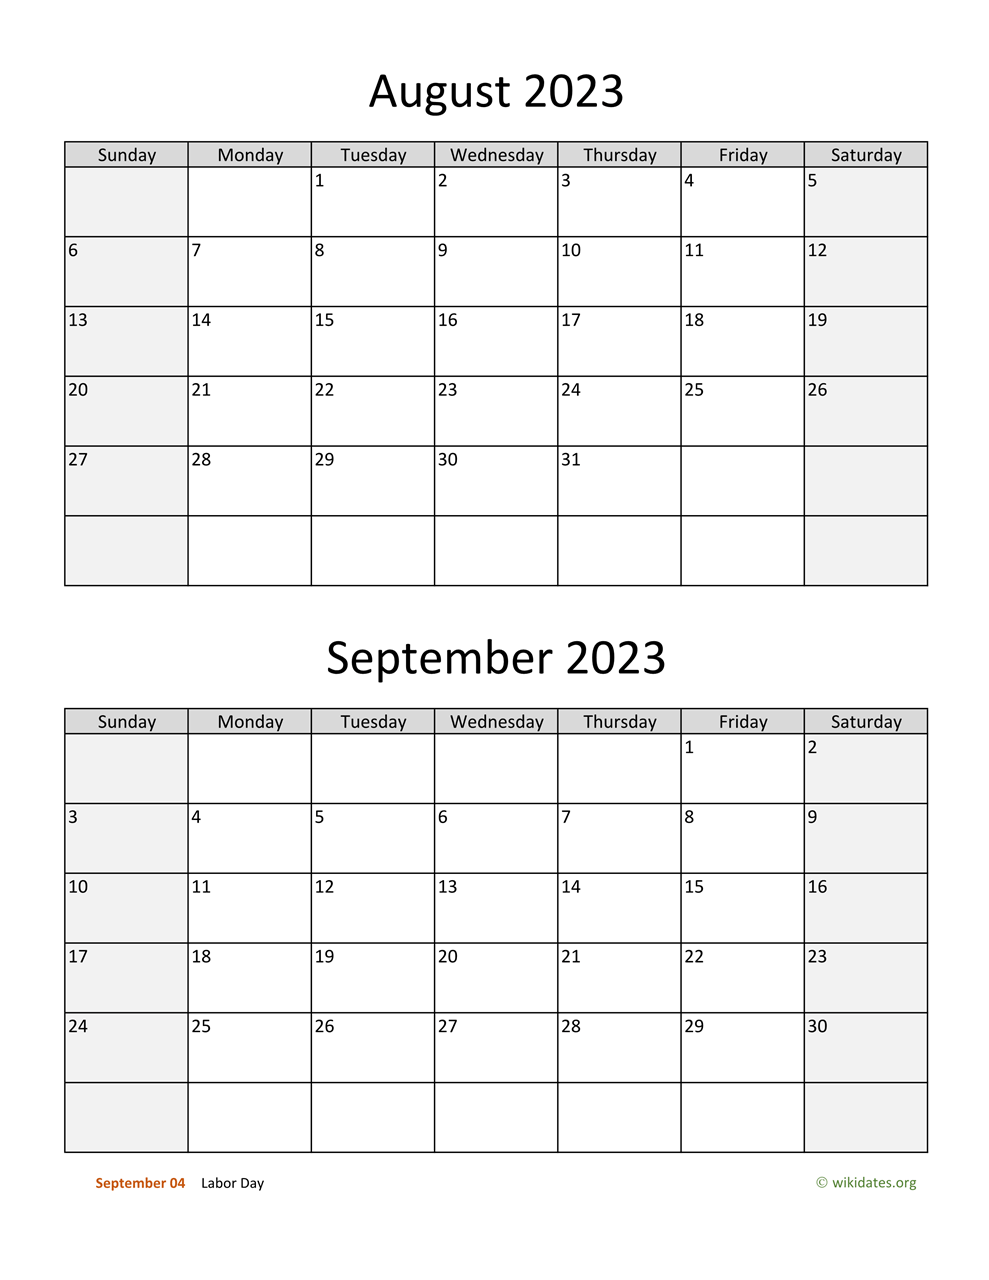 August And September 2023 Calendar WikiDates